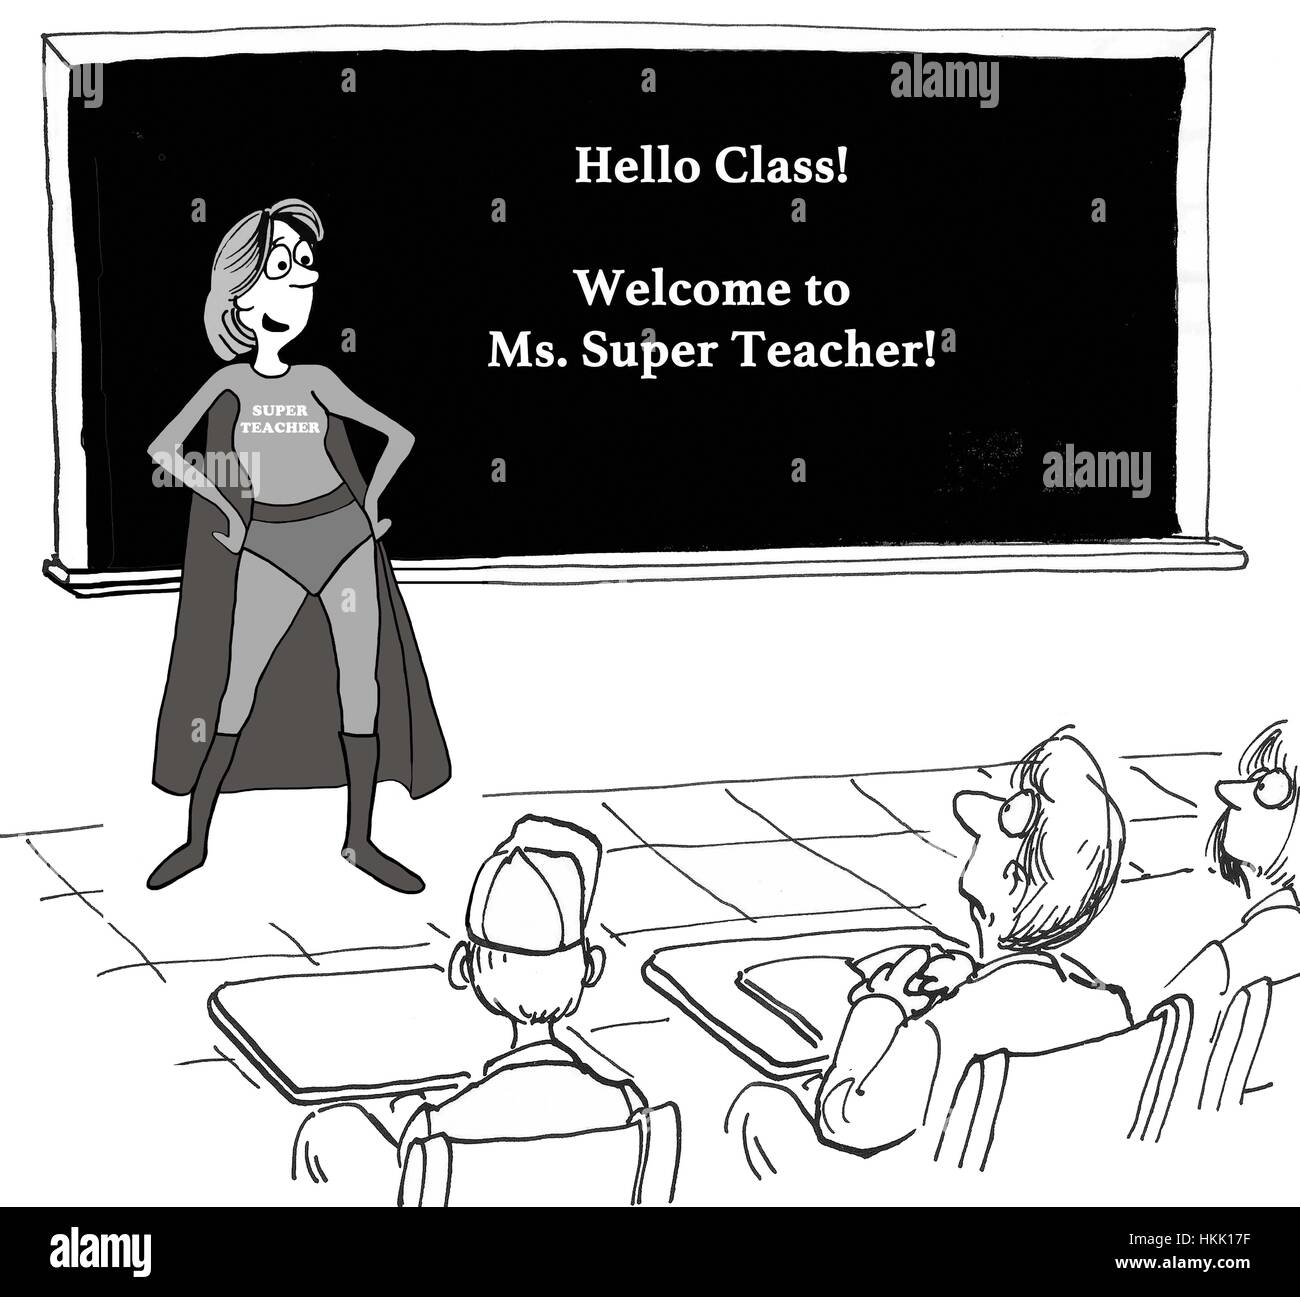 Education cartoon depicting Ms Super Teacher leading the class. Stock Photo